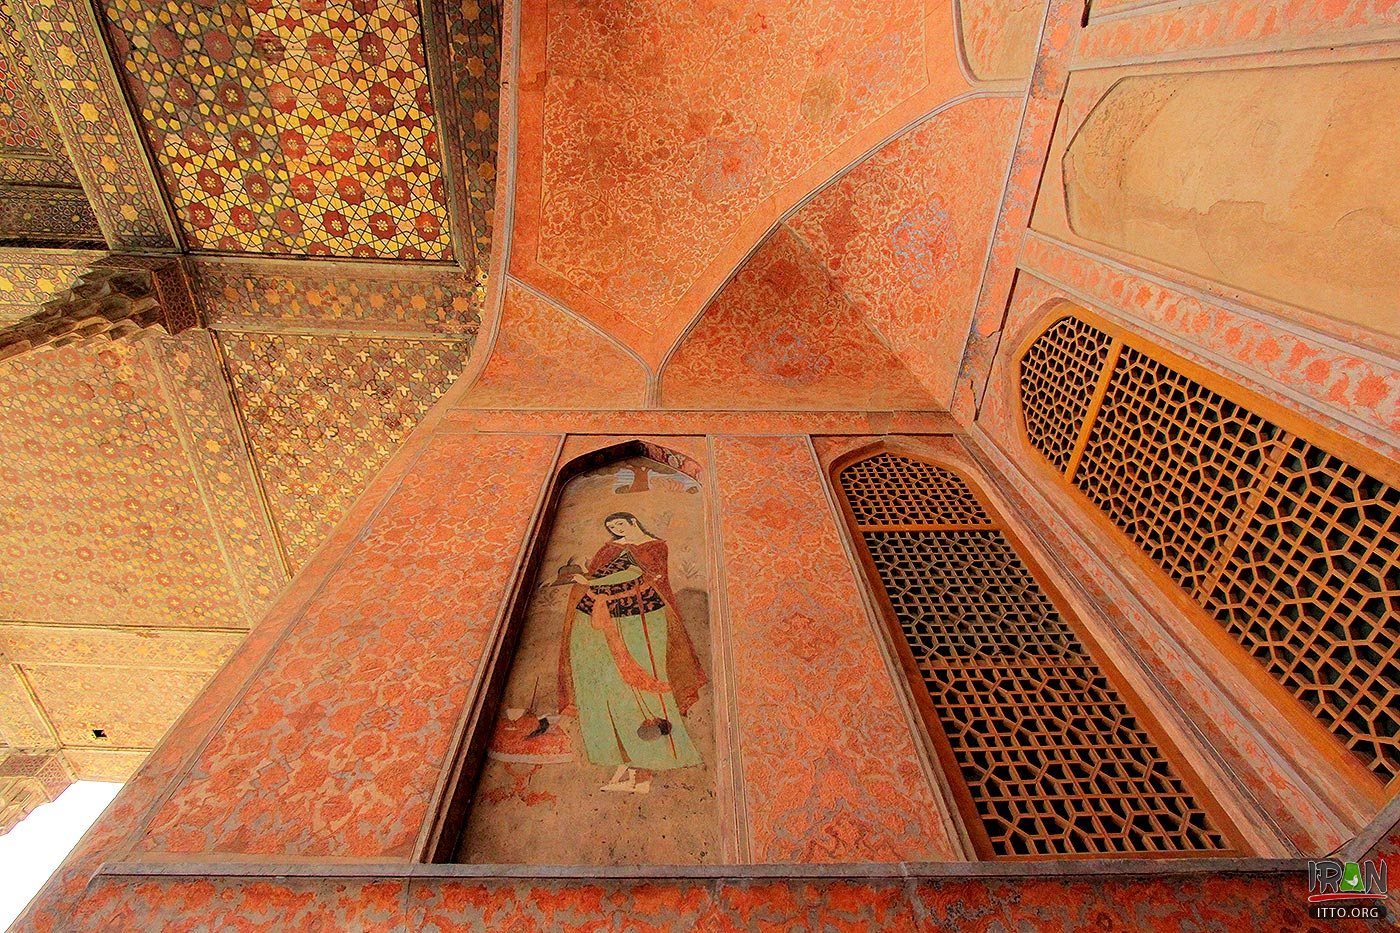 عالیقاپو,alighapo,aligapou,aliqapo,aliqapoo,alighapoo,naghshejahan,naqsh jahan,isfahan,esfahan,اصفهان,نقش جهان